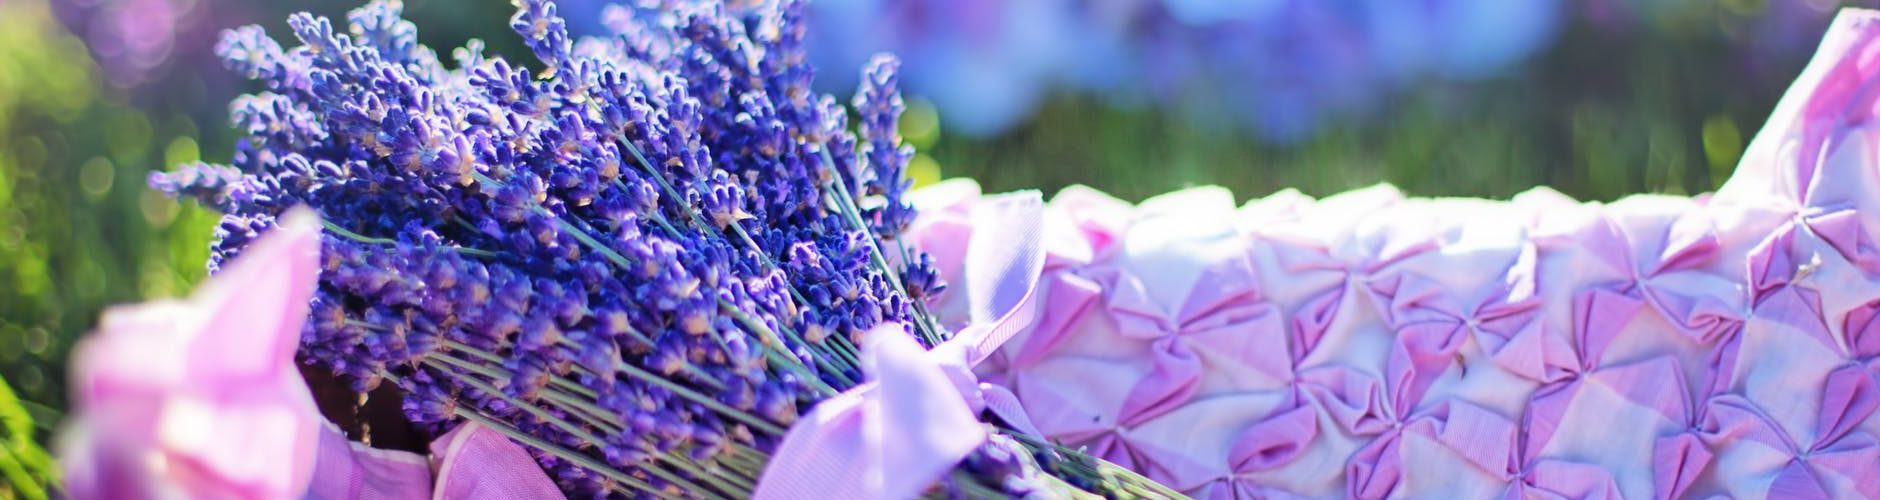 focus photo of lavender on basket